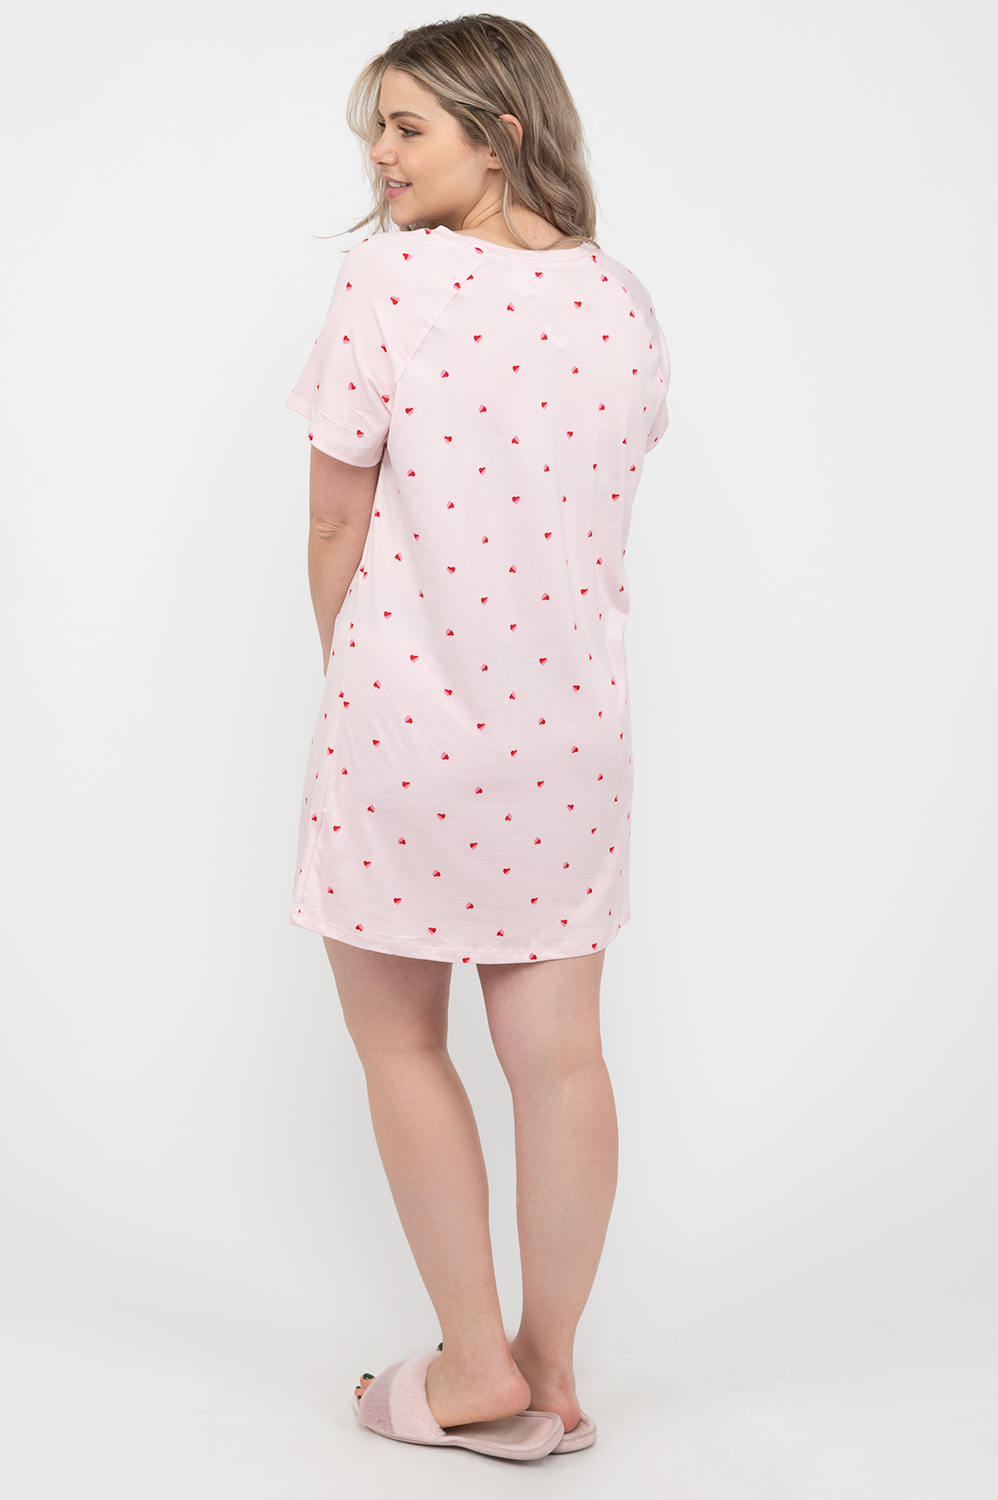 Sleep & Co. - Soft Touch, crew neck, short sleeve sleepshirt, Peace & Love,  1X - Plus Size. Colour: light pink. Size: 1x